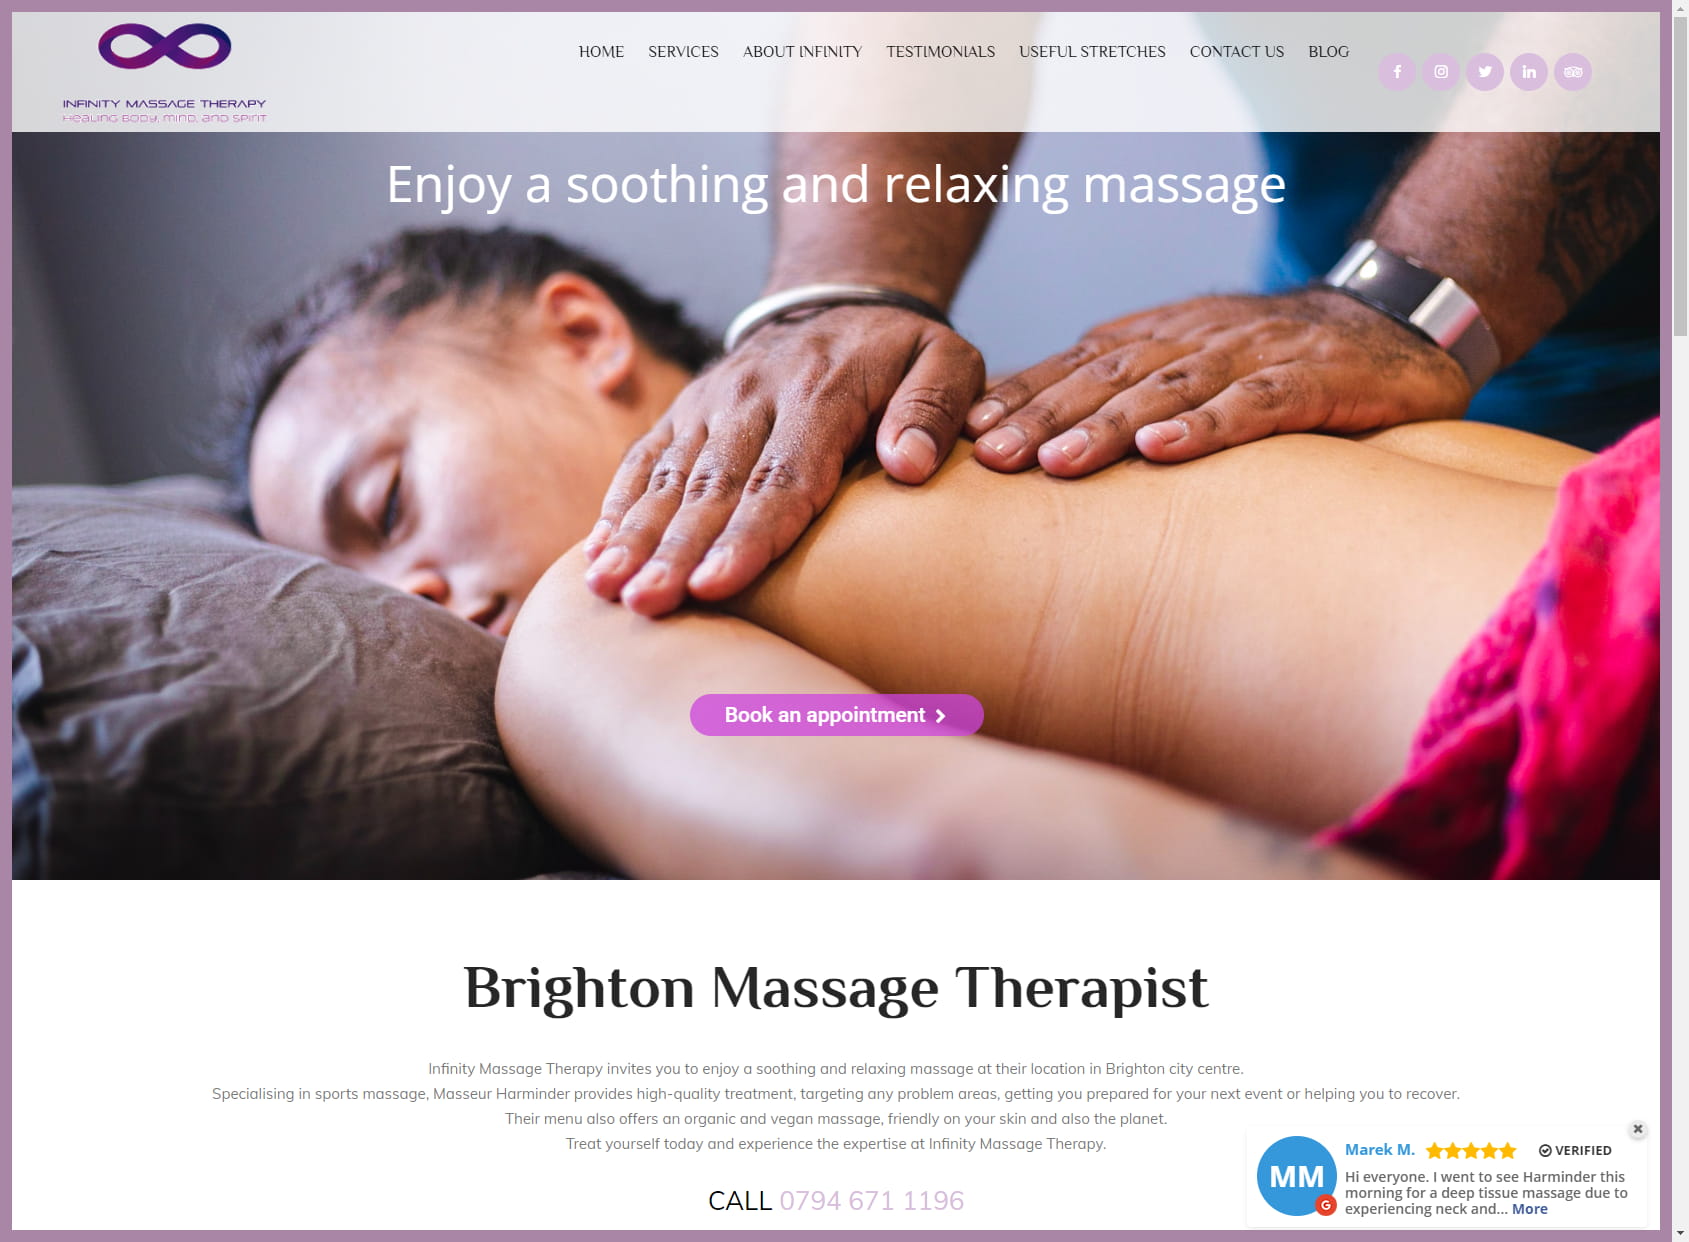 Infinity Massage Therapy Brighton